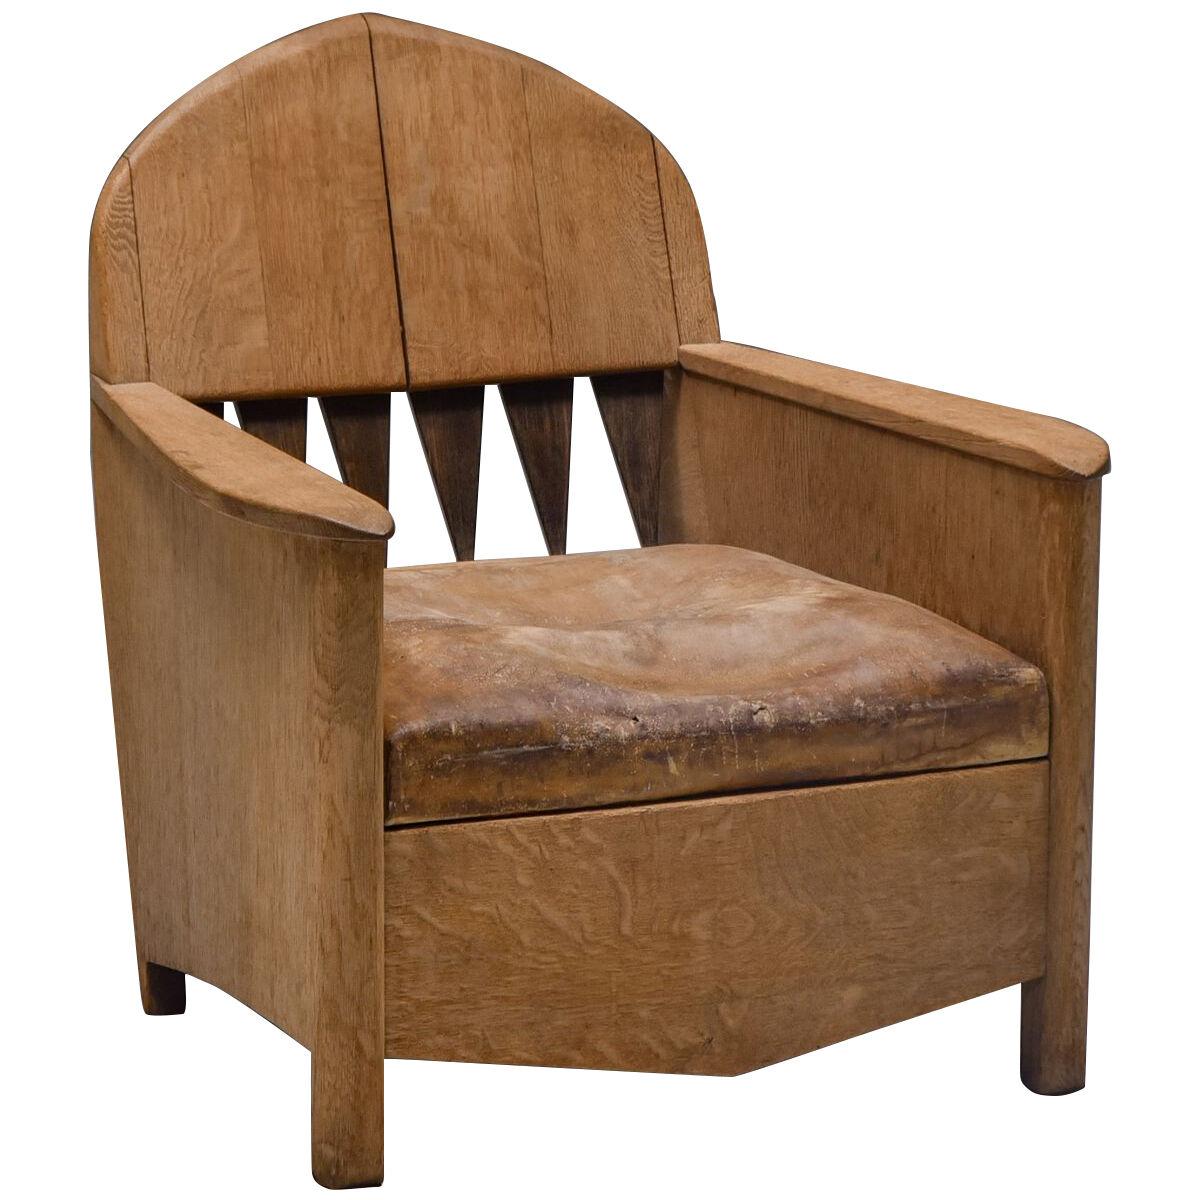  Amsterdamse School Lounge Chair - 1940's